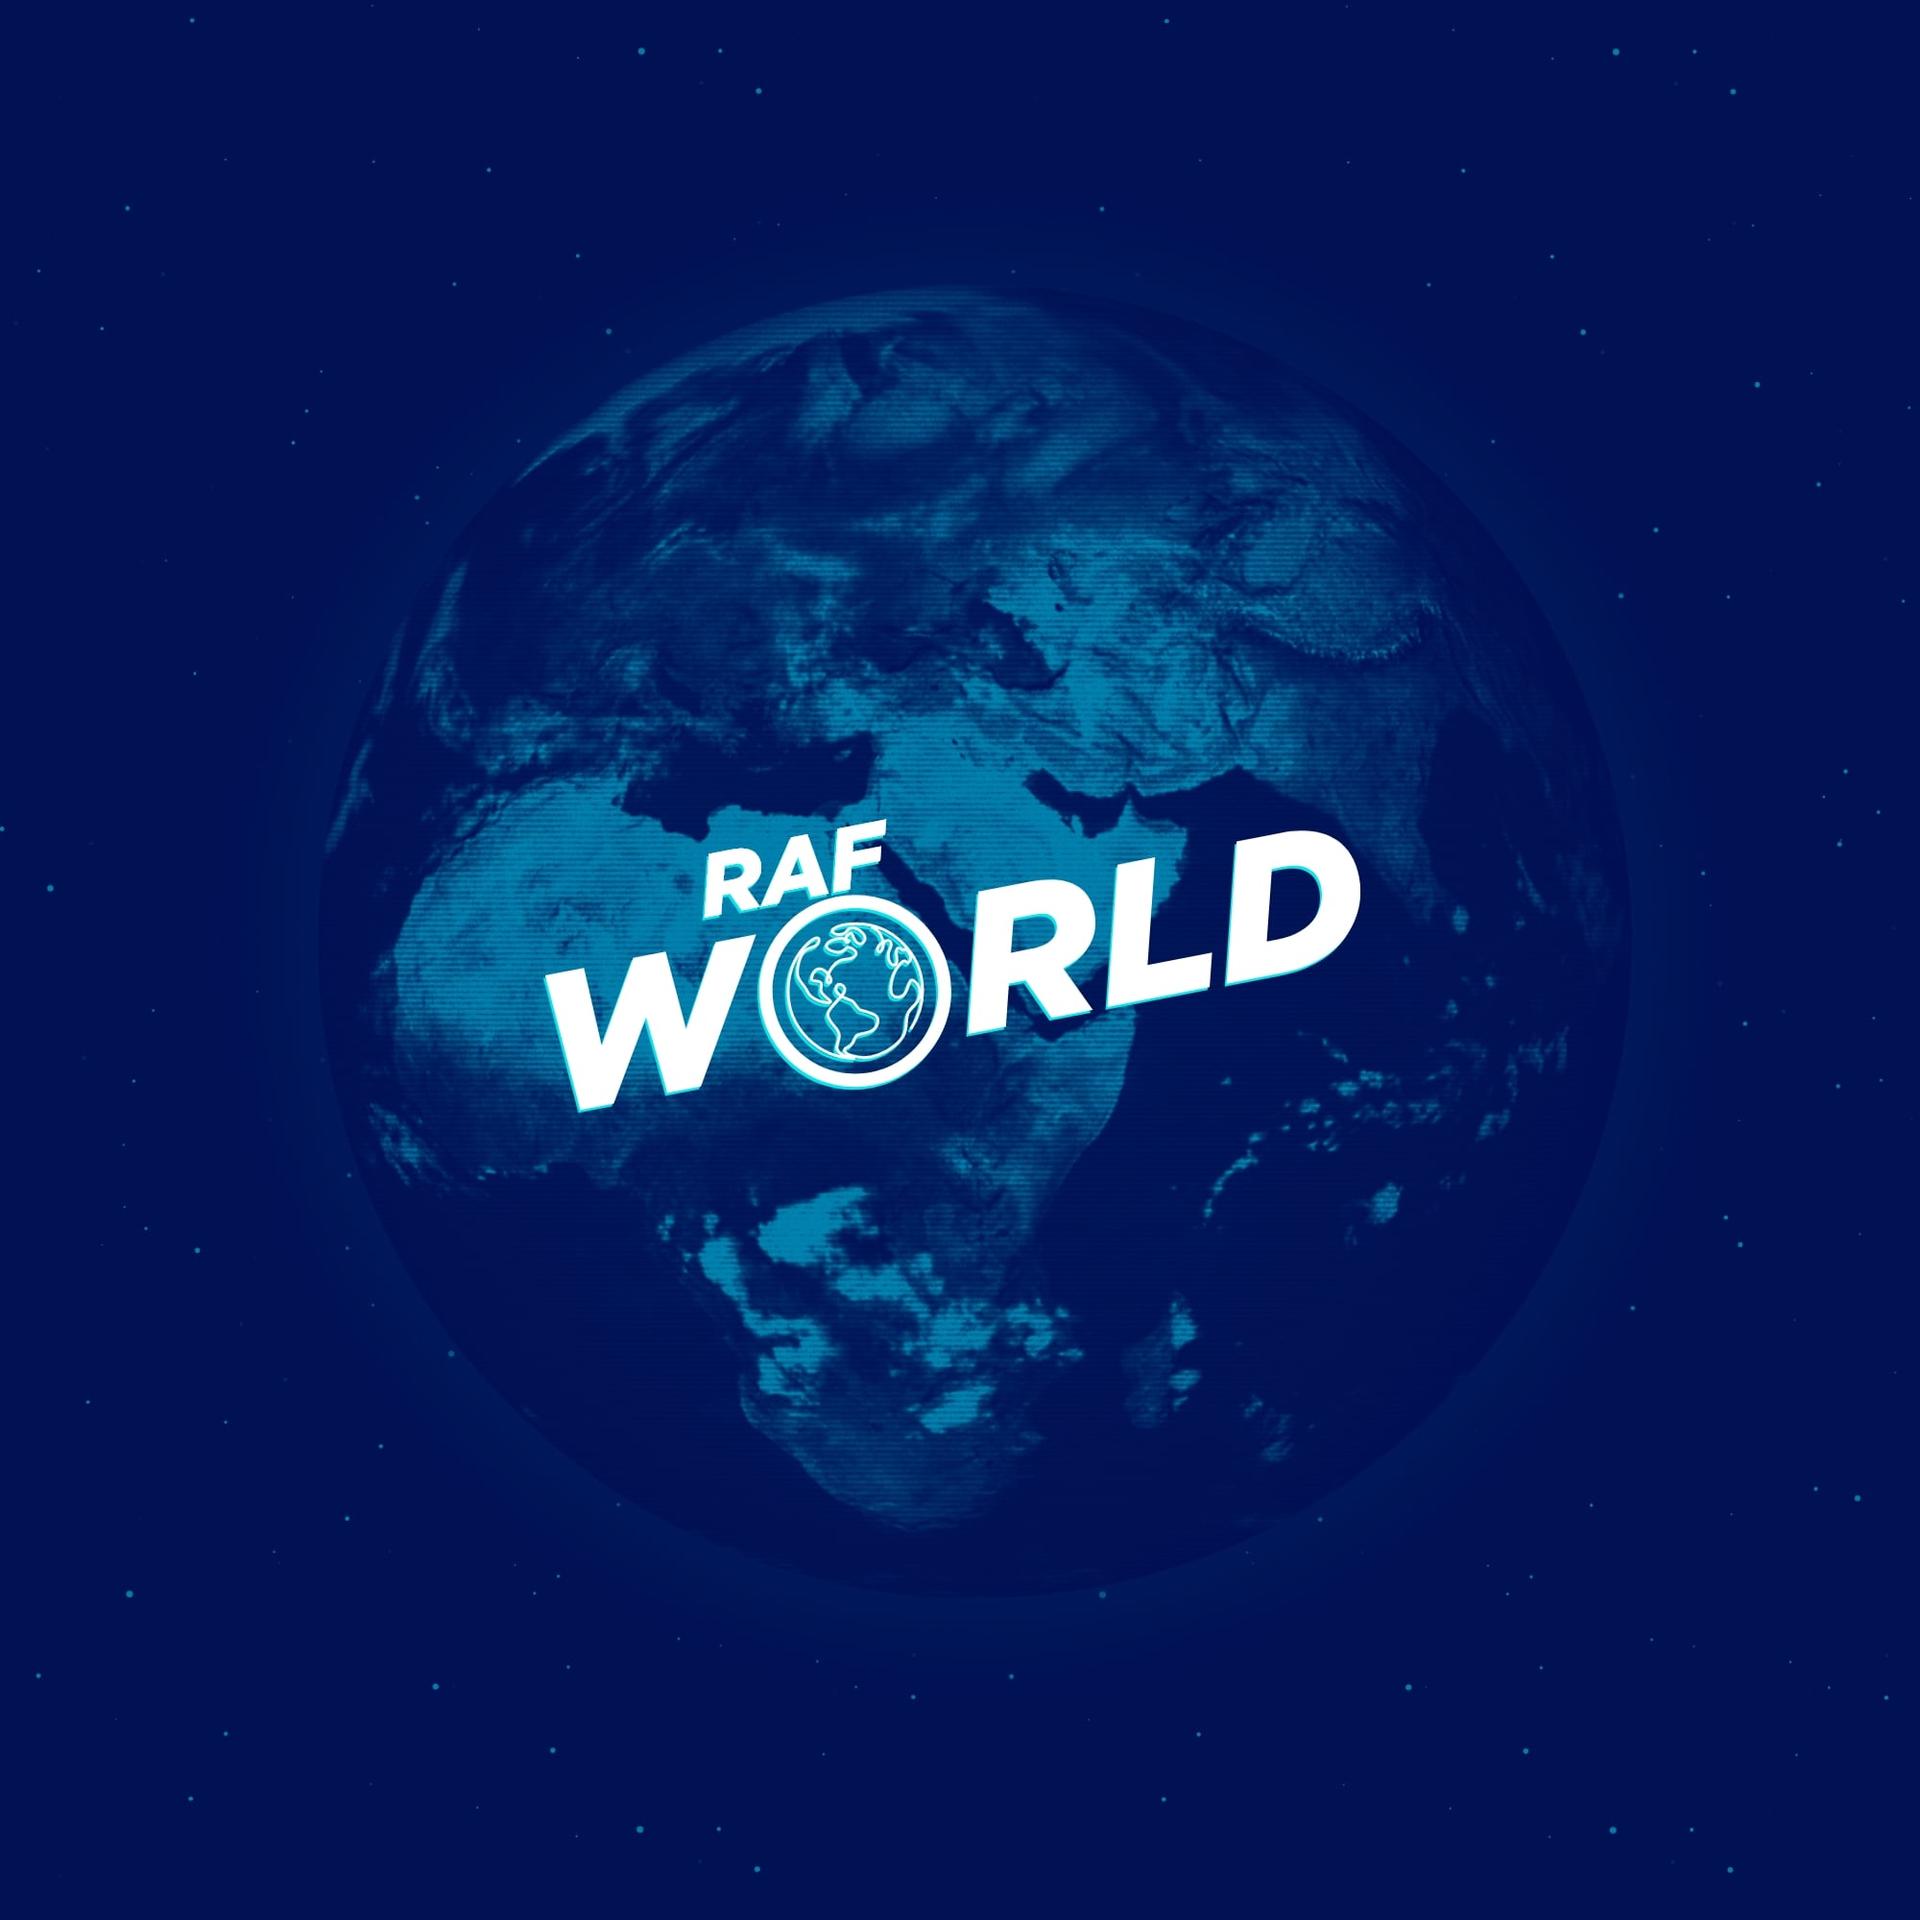 RAF World logo, over globe on blue background